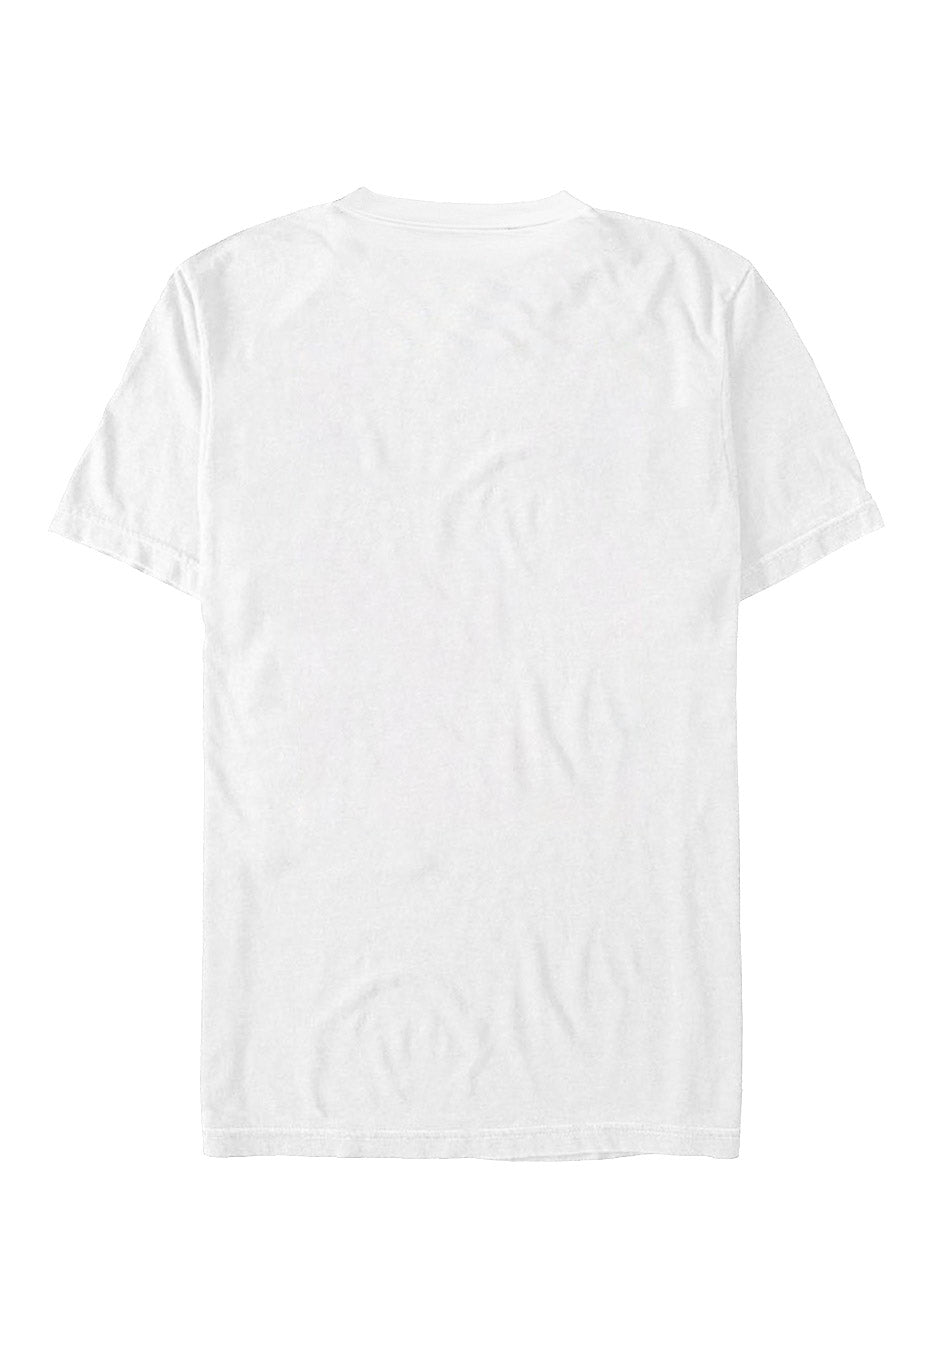 Beastie Boys - So What Cha Want White - T-Shirt